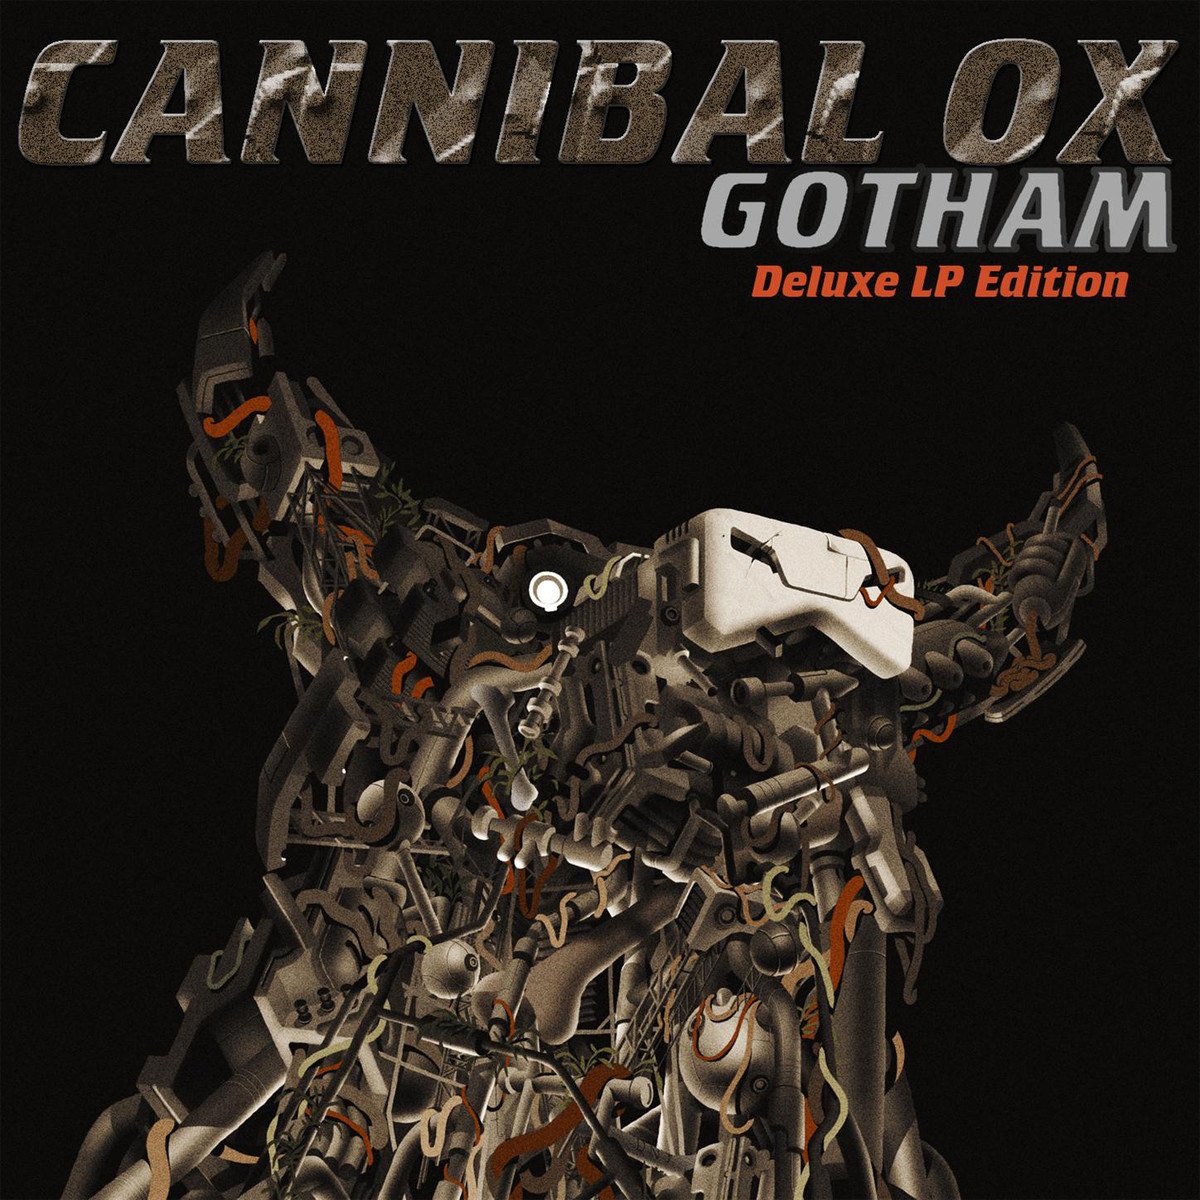 Gotham (Deluxe LP Edition)